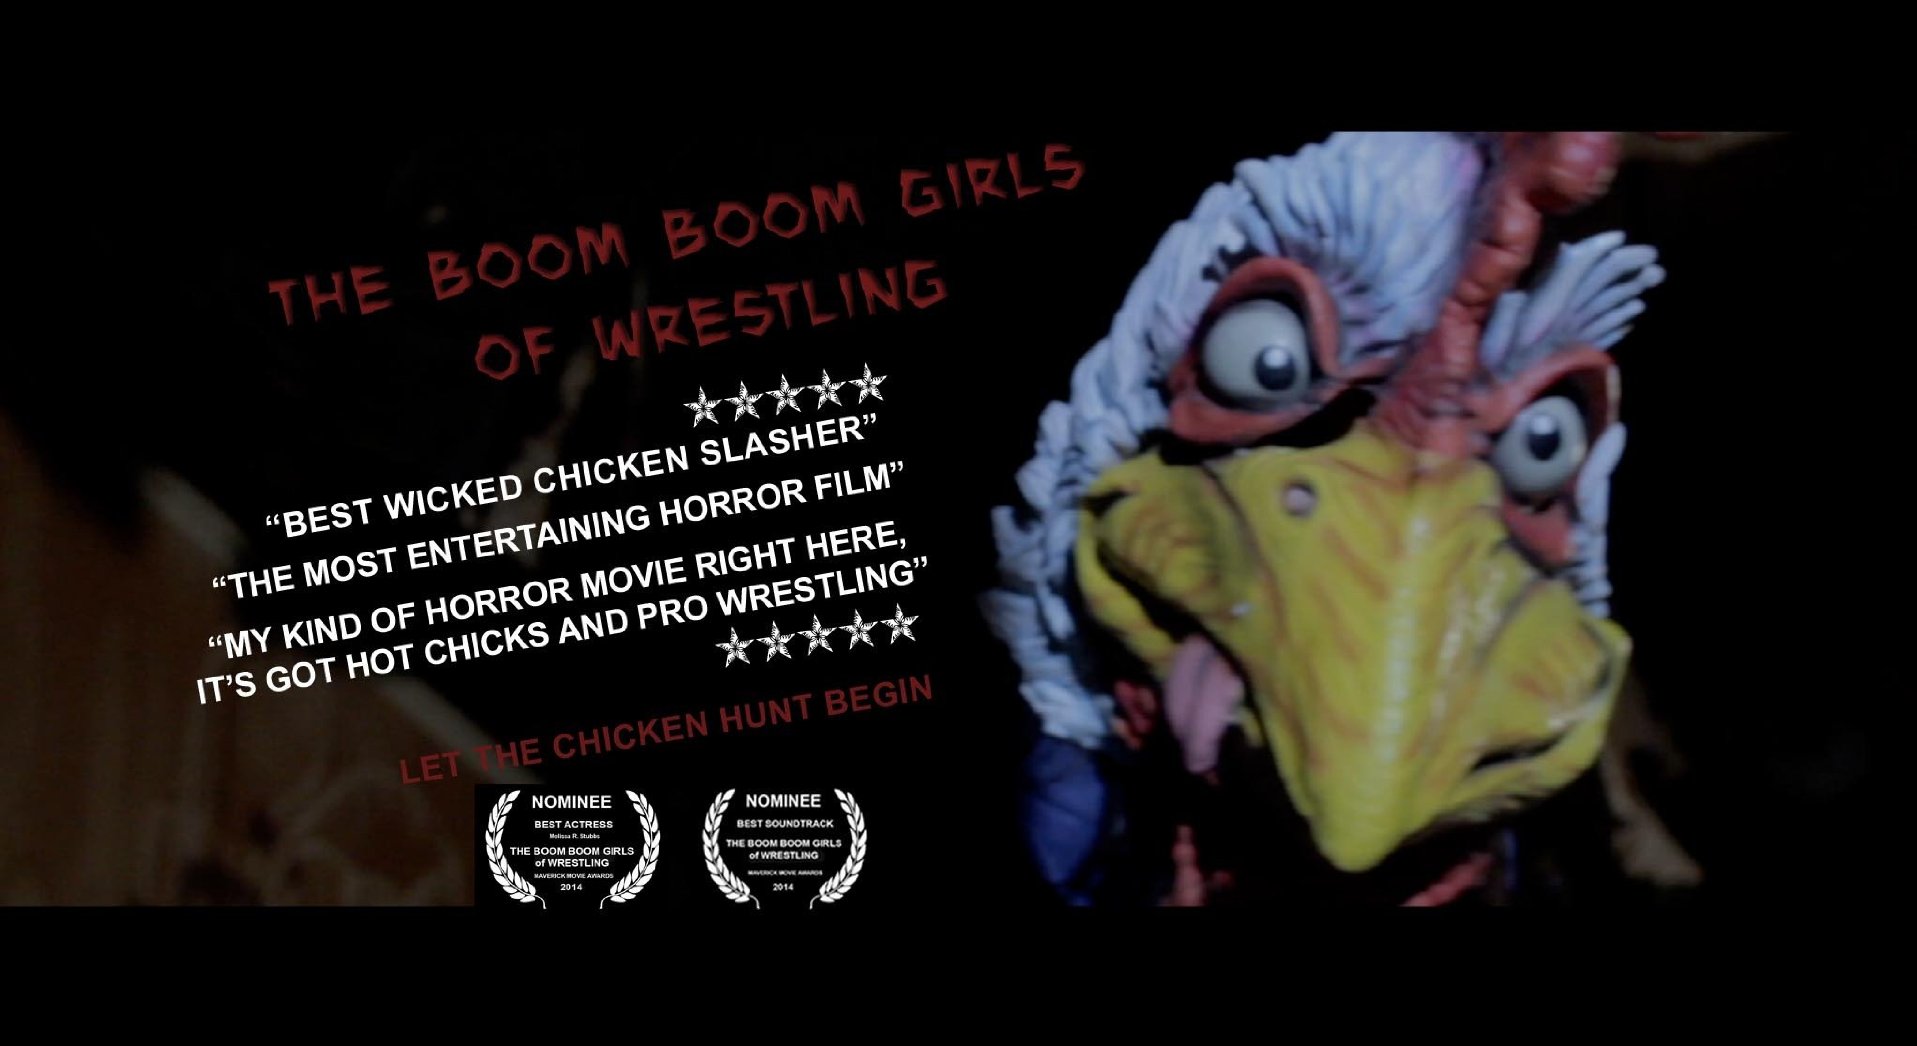 Crystal as the Villainous Slasher in The Boom Boom Girls Of Wrestling!